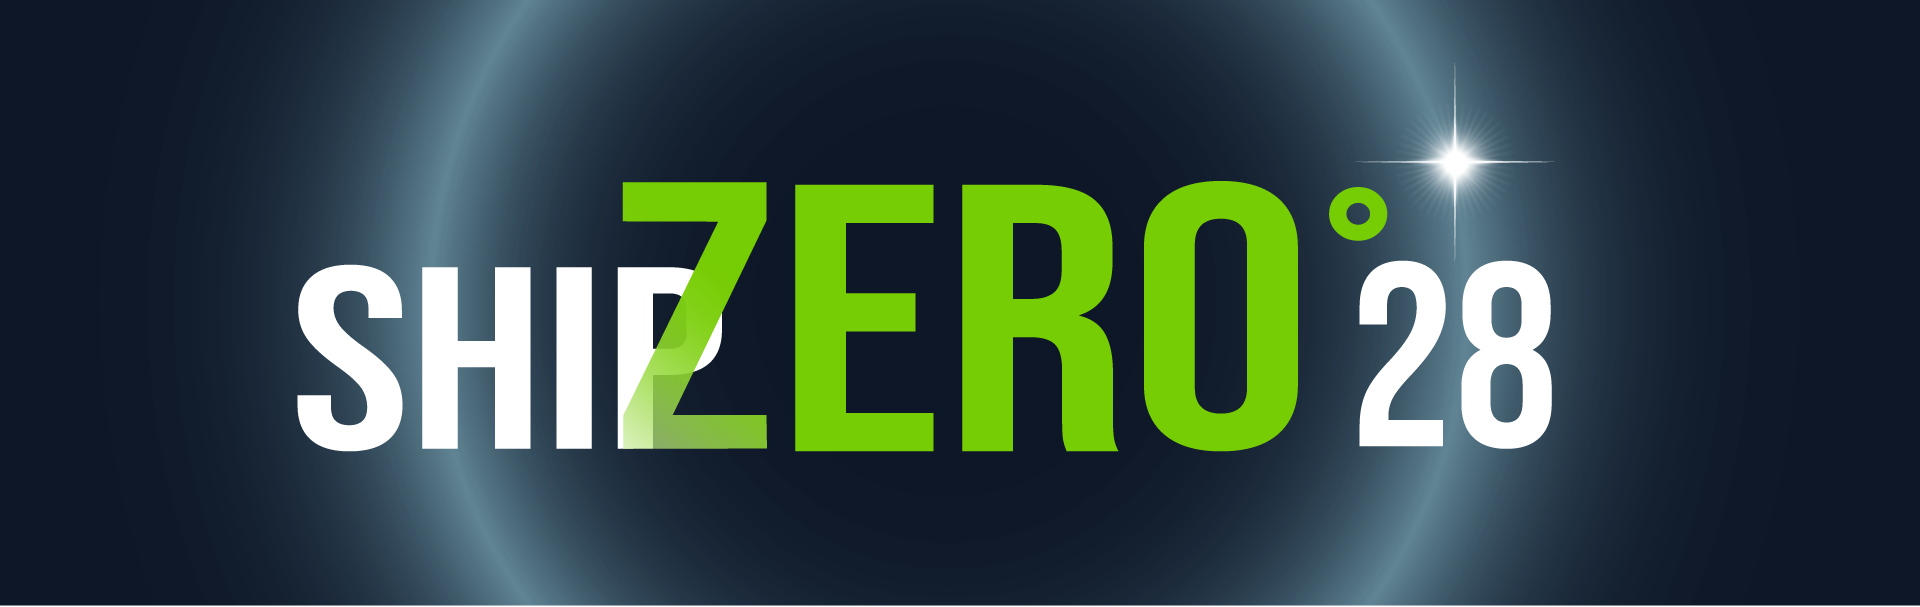 ShipZERO 26.5 header